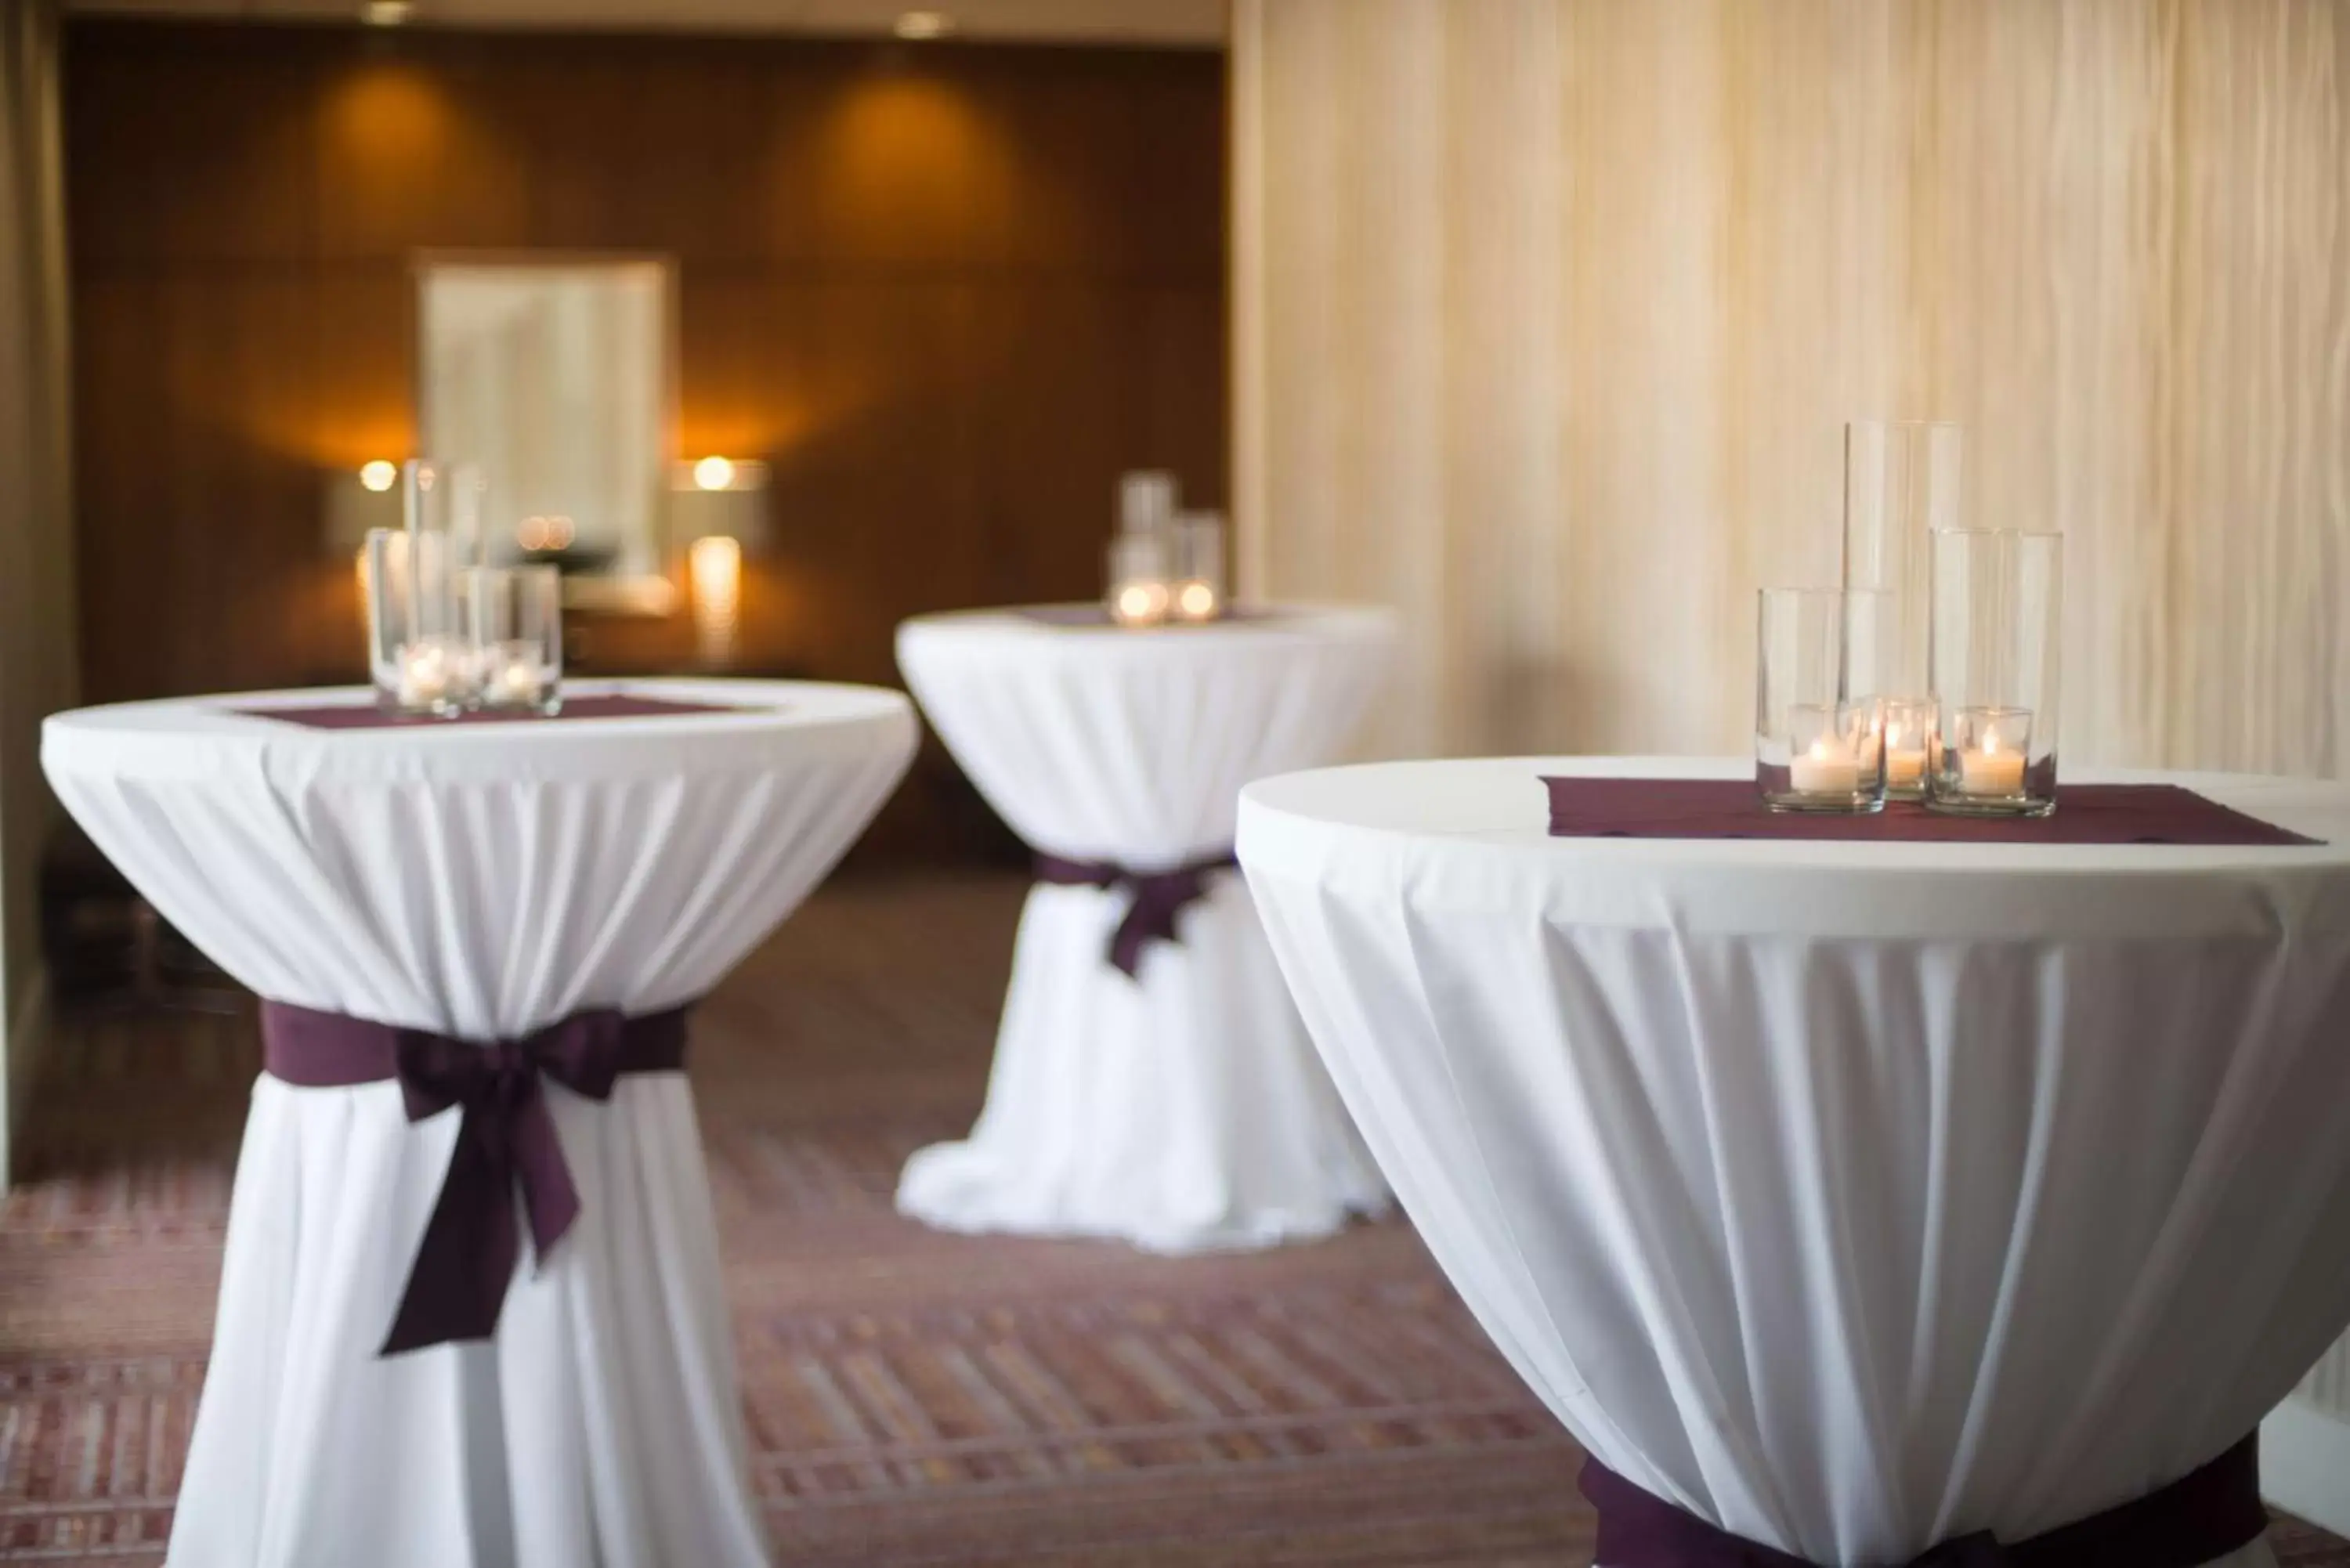 Banquet/Function facilities, Banquet Facilities in Radisson Hotel Corning